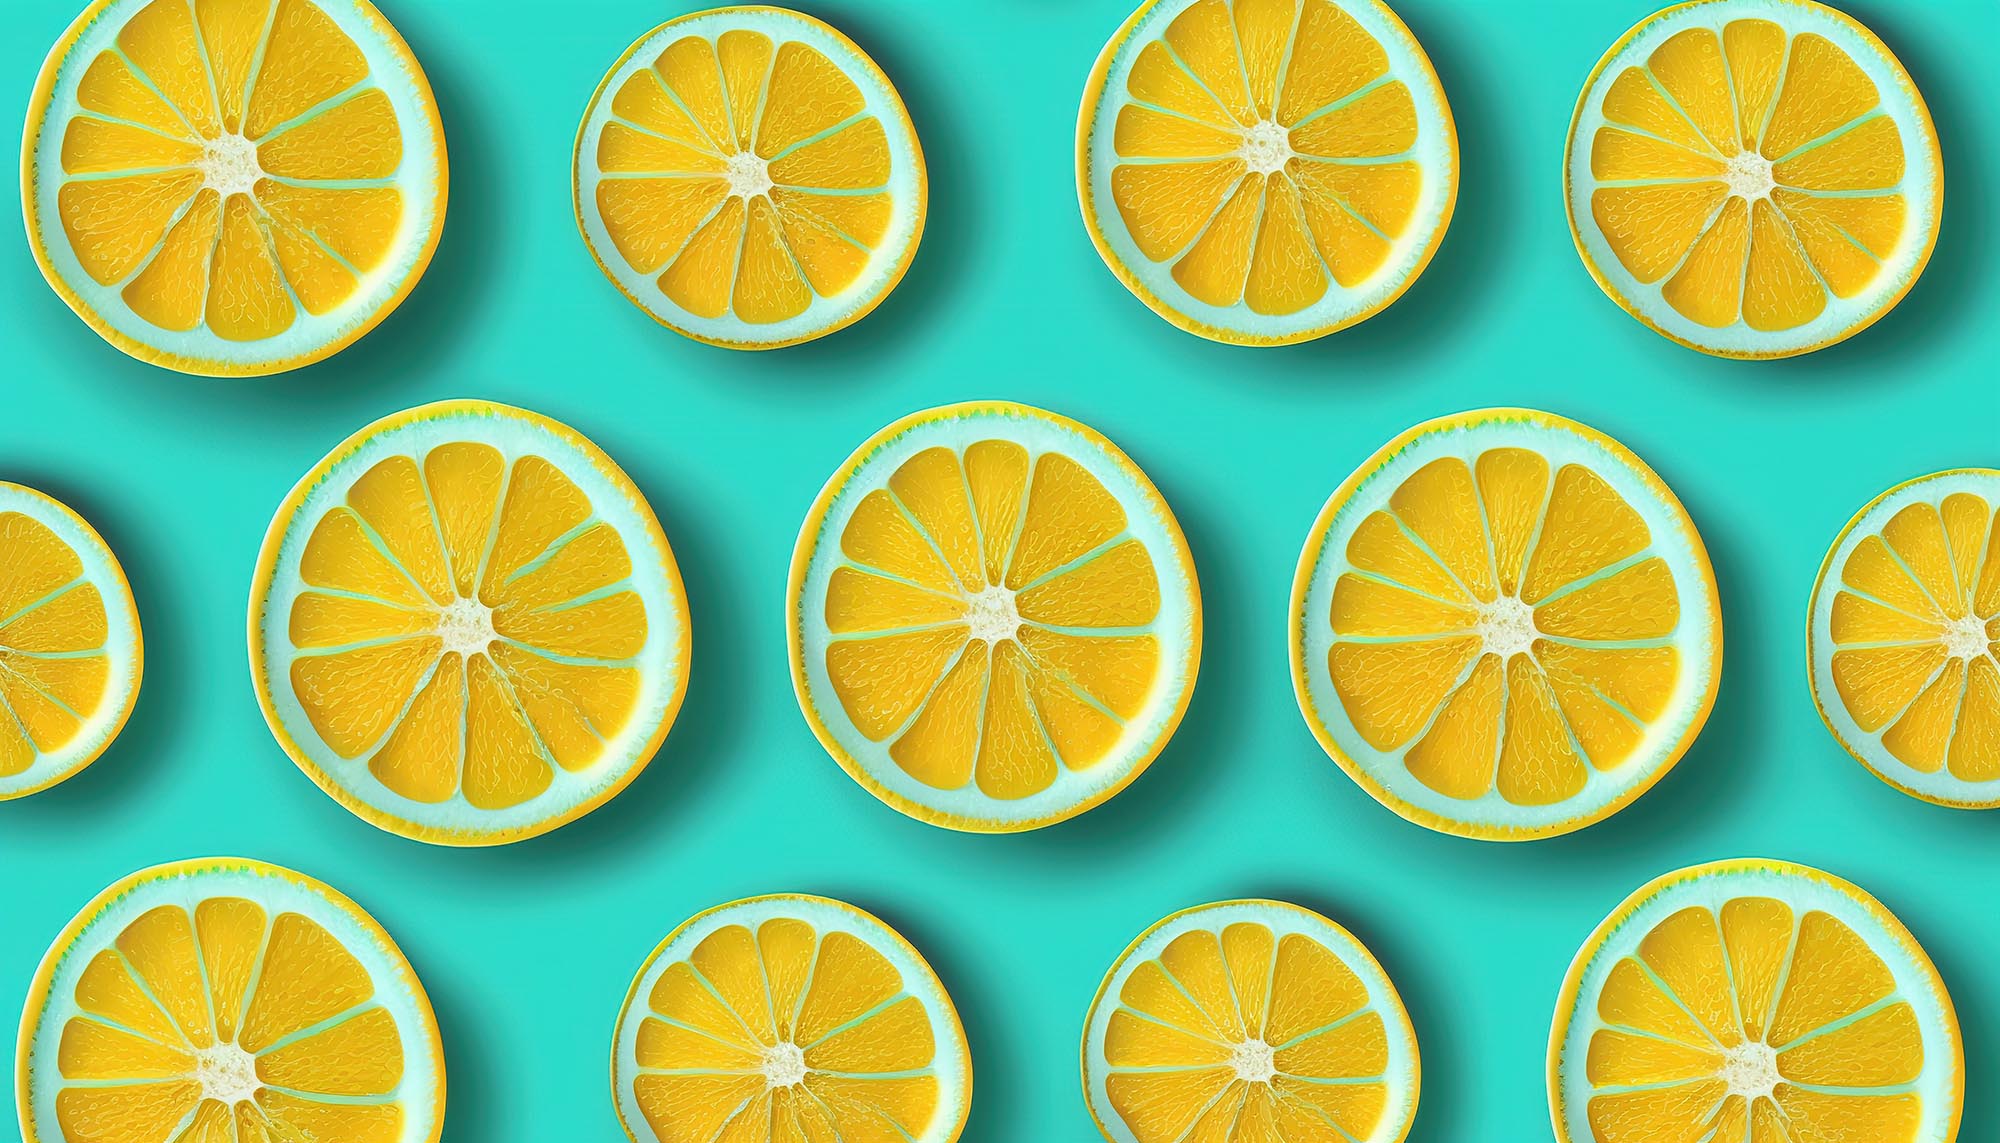 Lemon slices pattern vibrant turquoise pastel color minimalist background